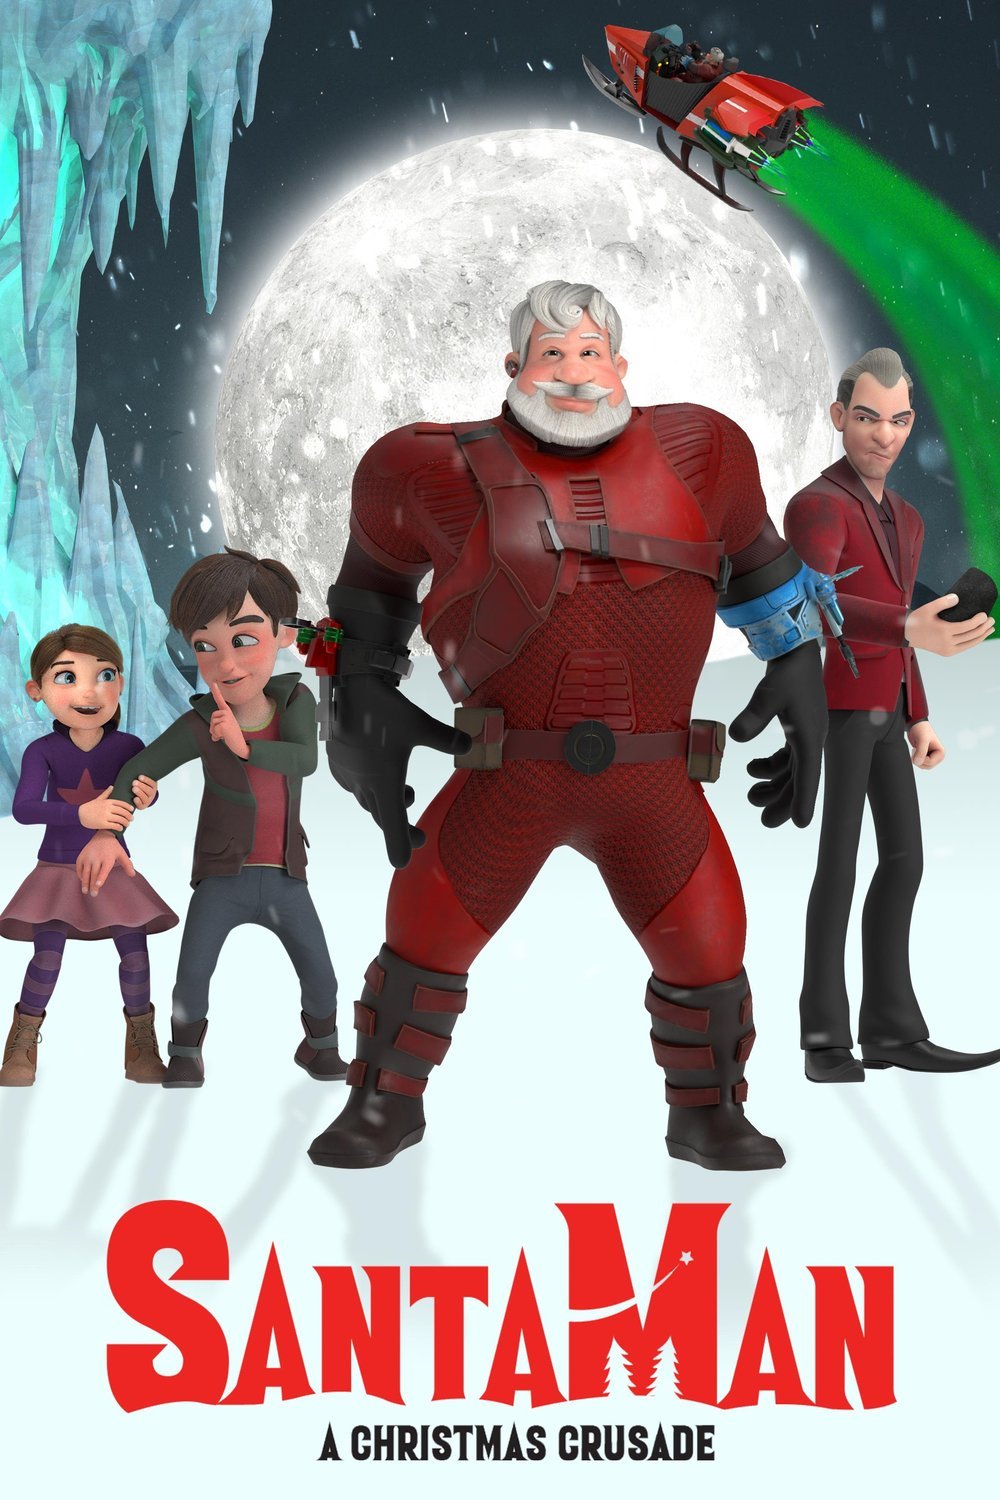 Poster of the movie Santaman